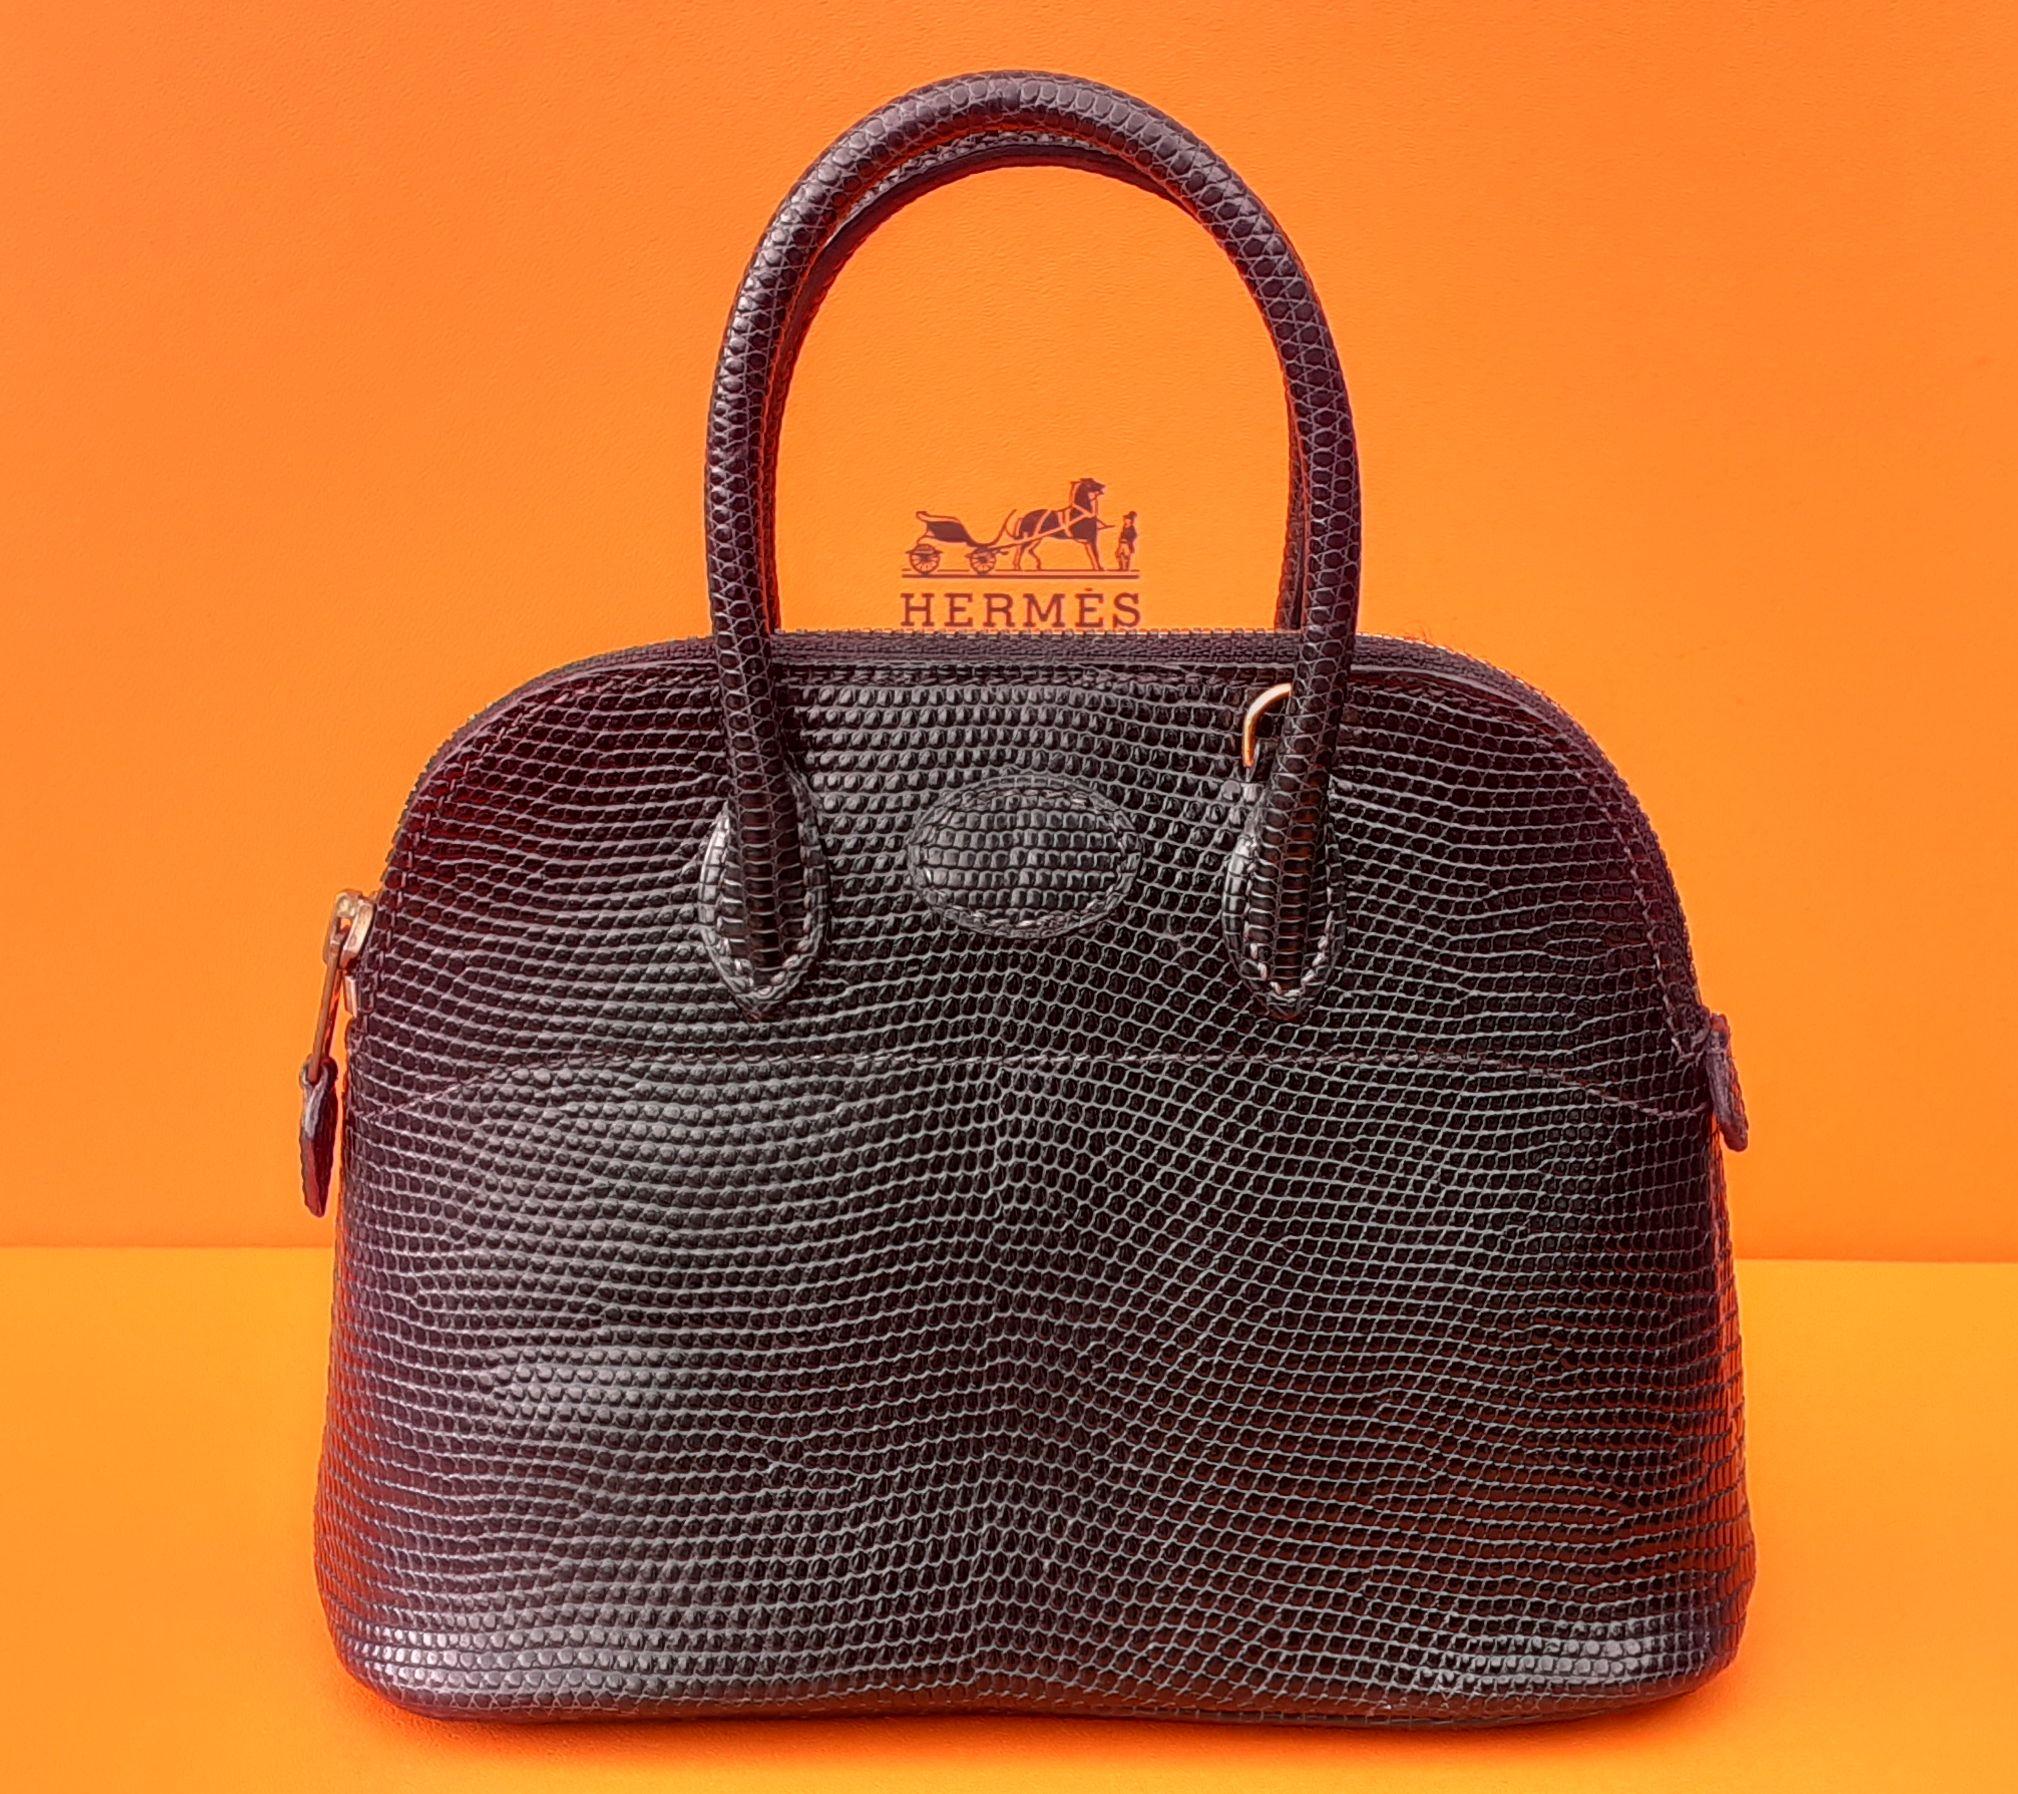 Exceptional Authentic Hermès Bag

Micro 